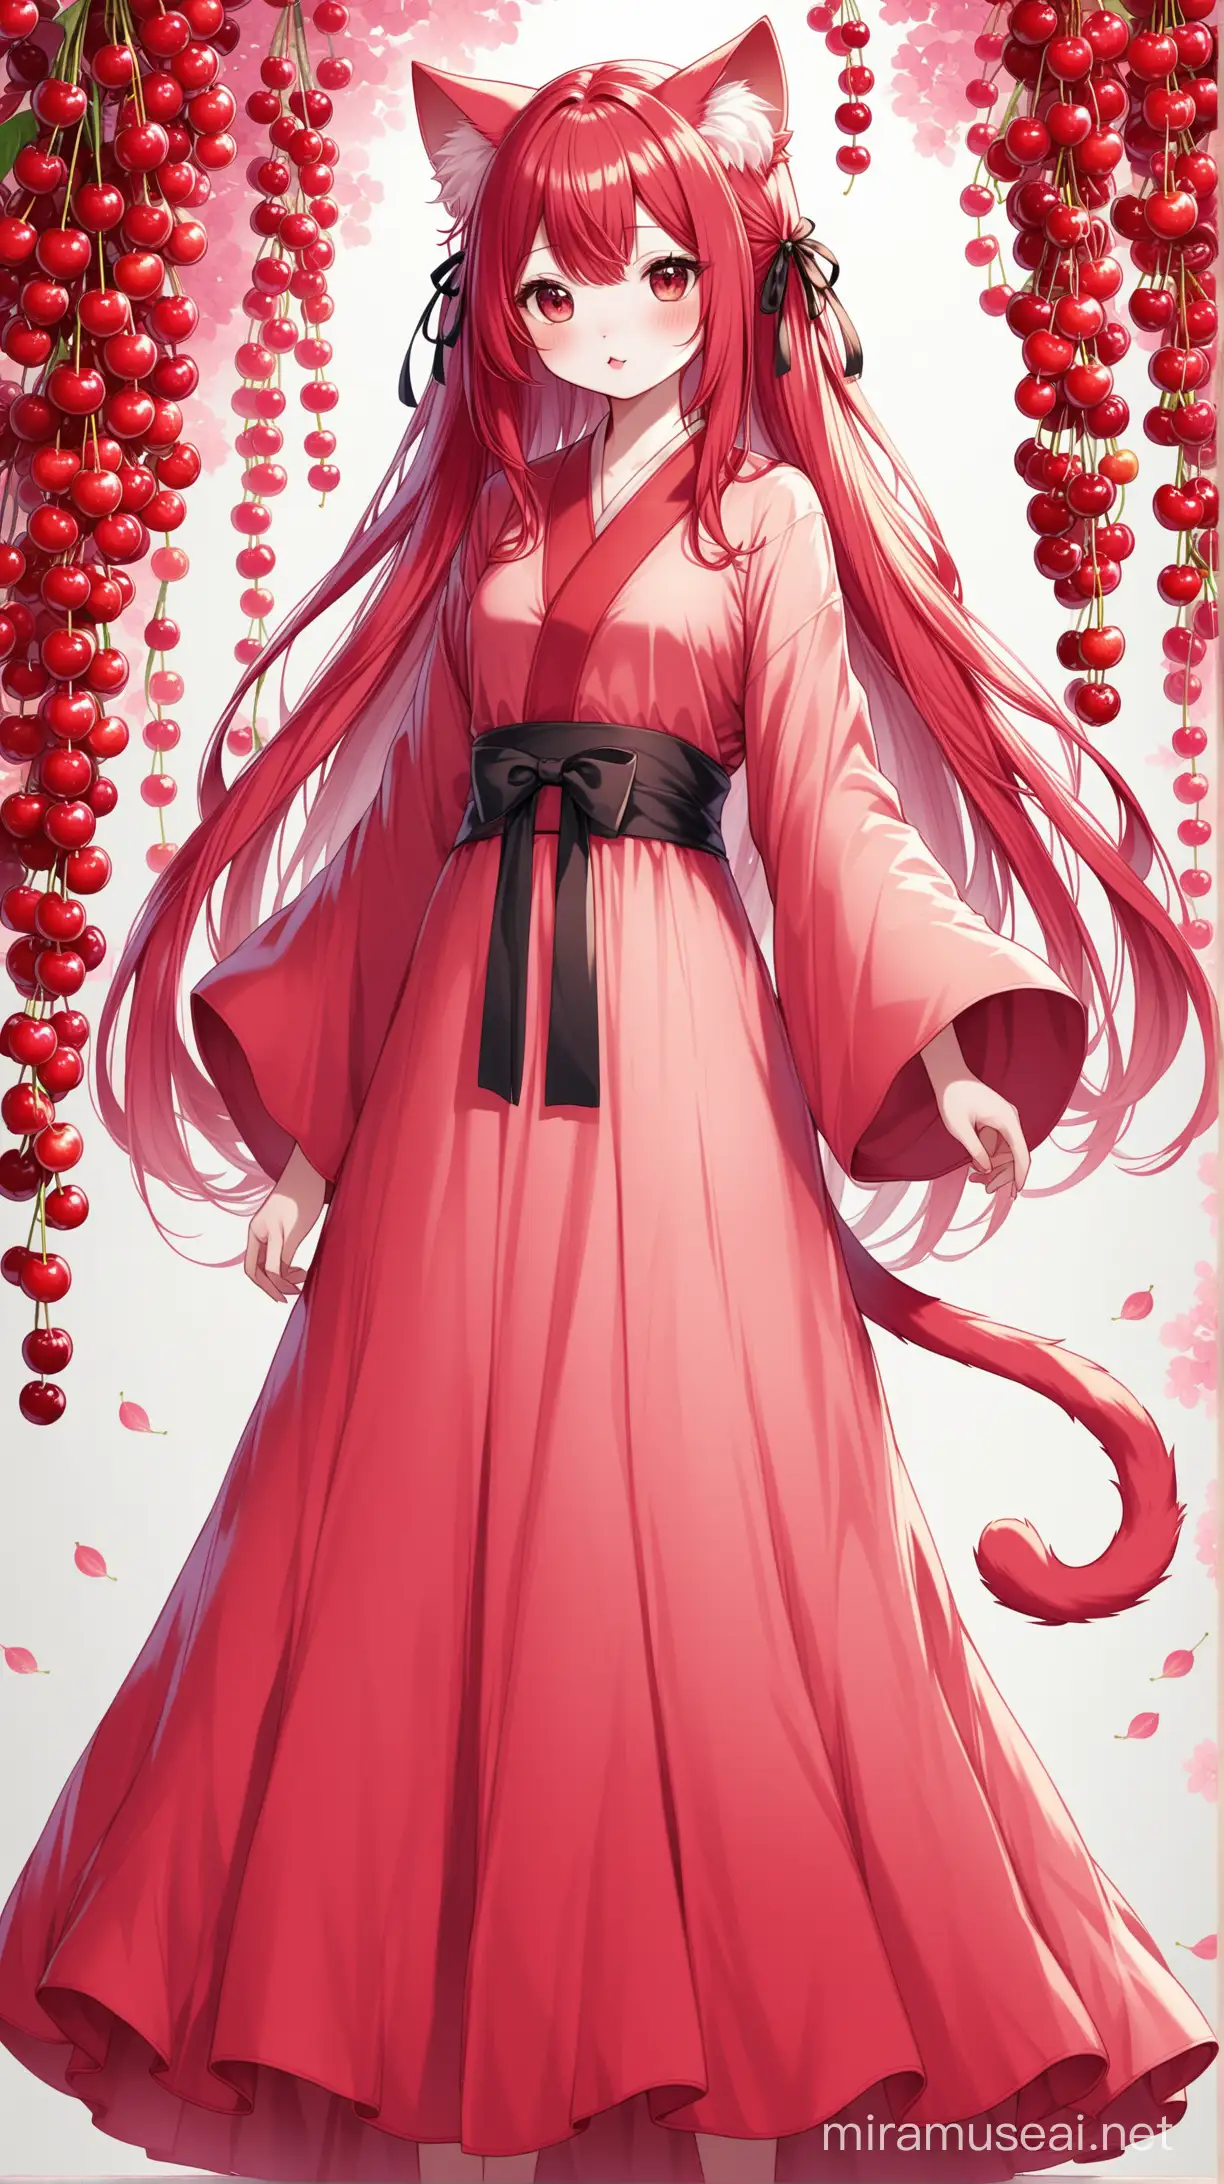 CherryHaired Humanoid Cat in Elegant Attire